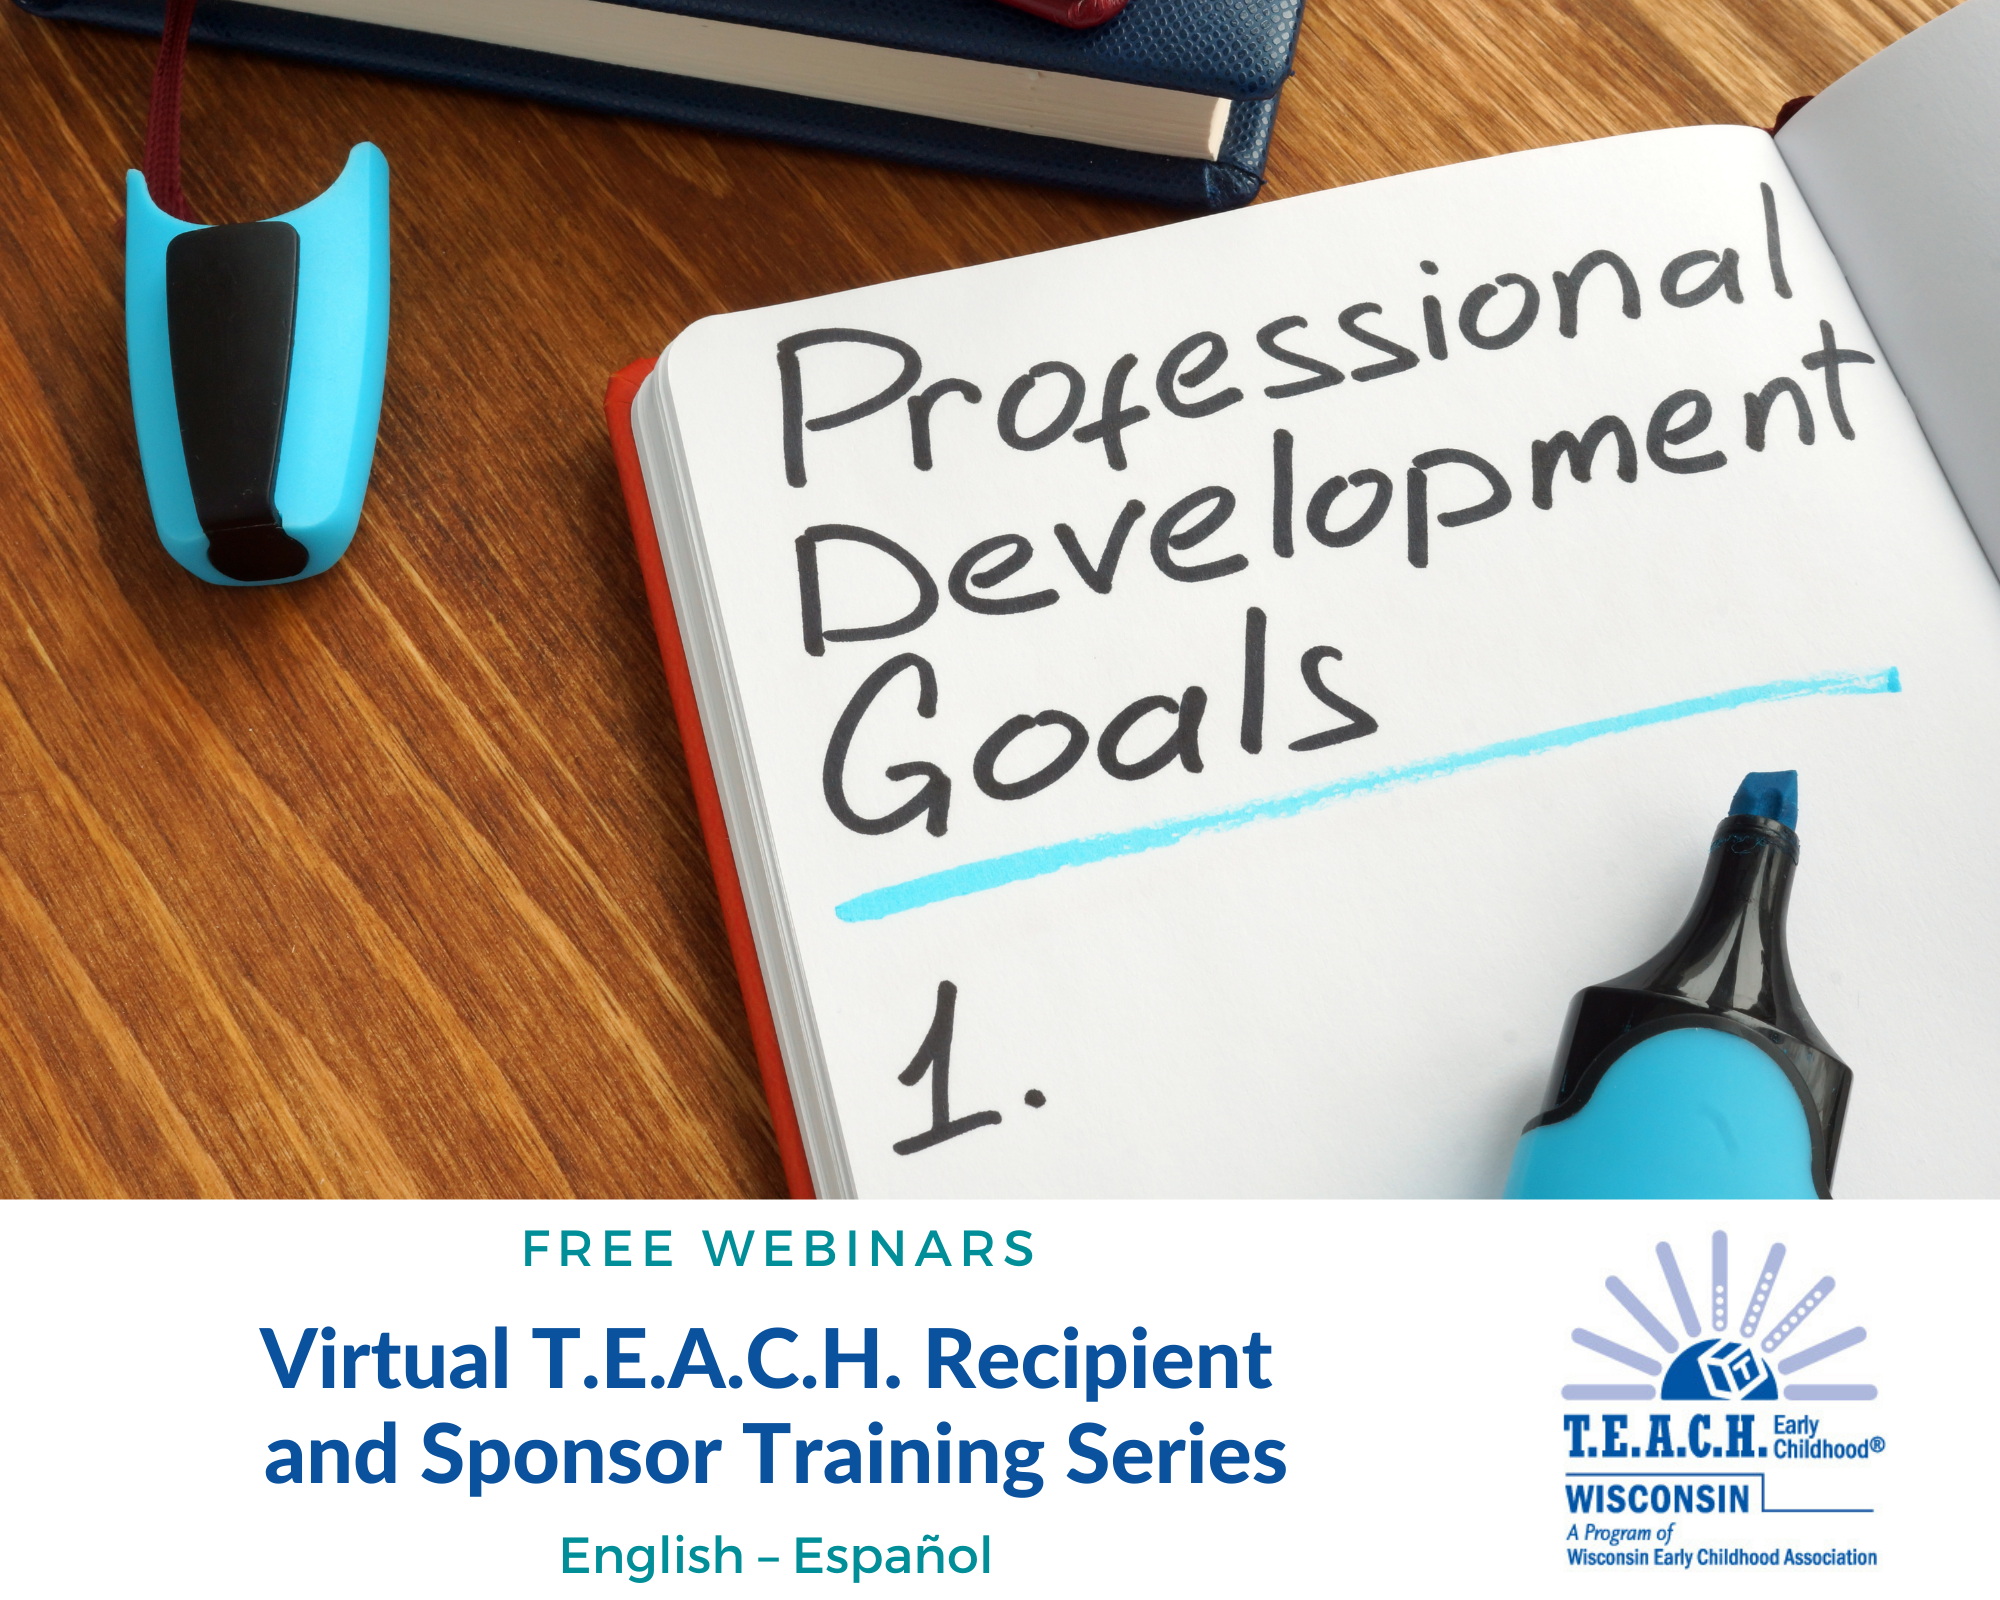 Virtual T.E.A.C.H. Recipient and Sponsor Training Series